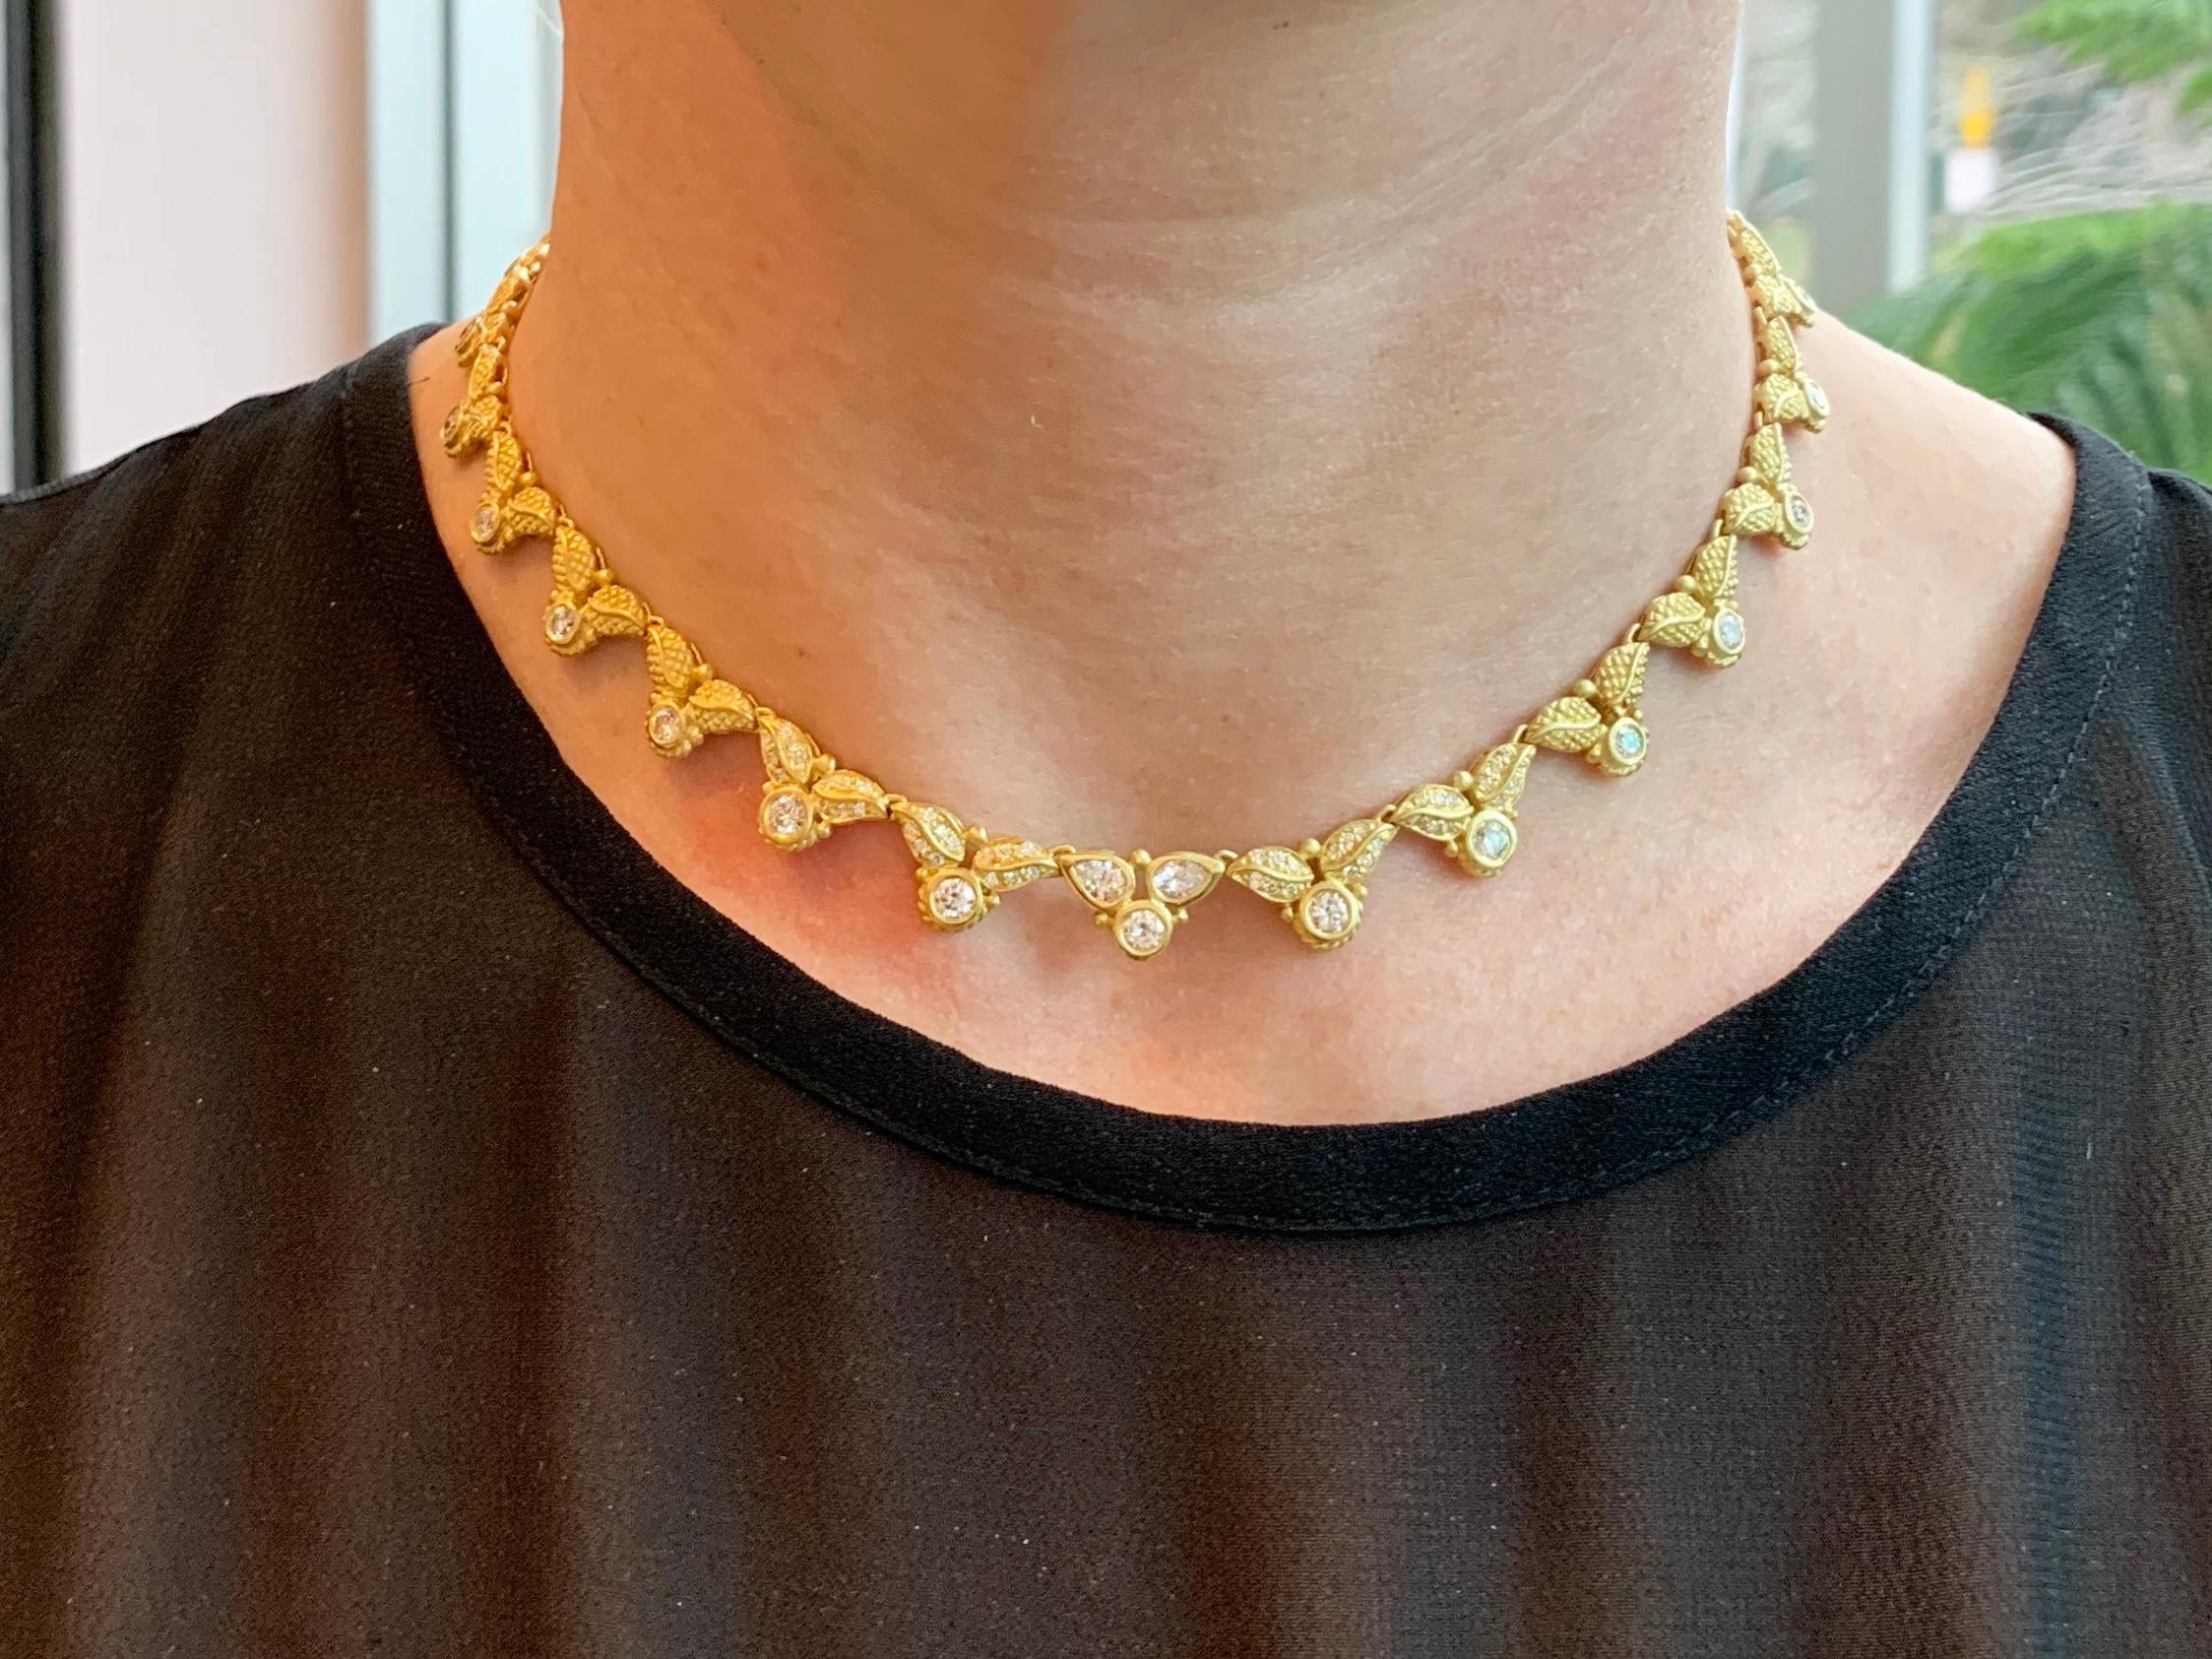 Round Cut Judith Ripka 18 Karat Yellow Gold Victorian Inspired Diamond Necklace